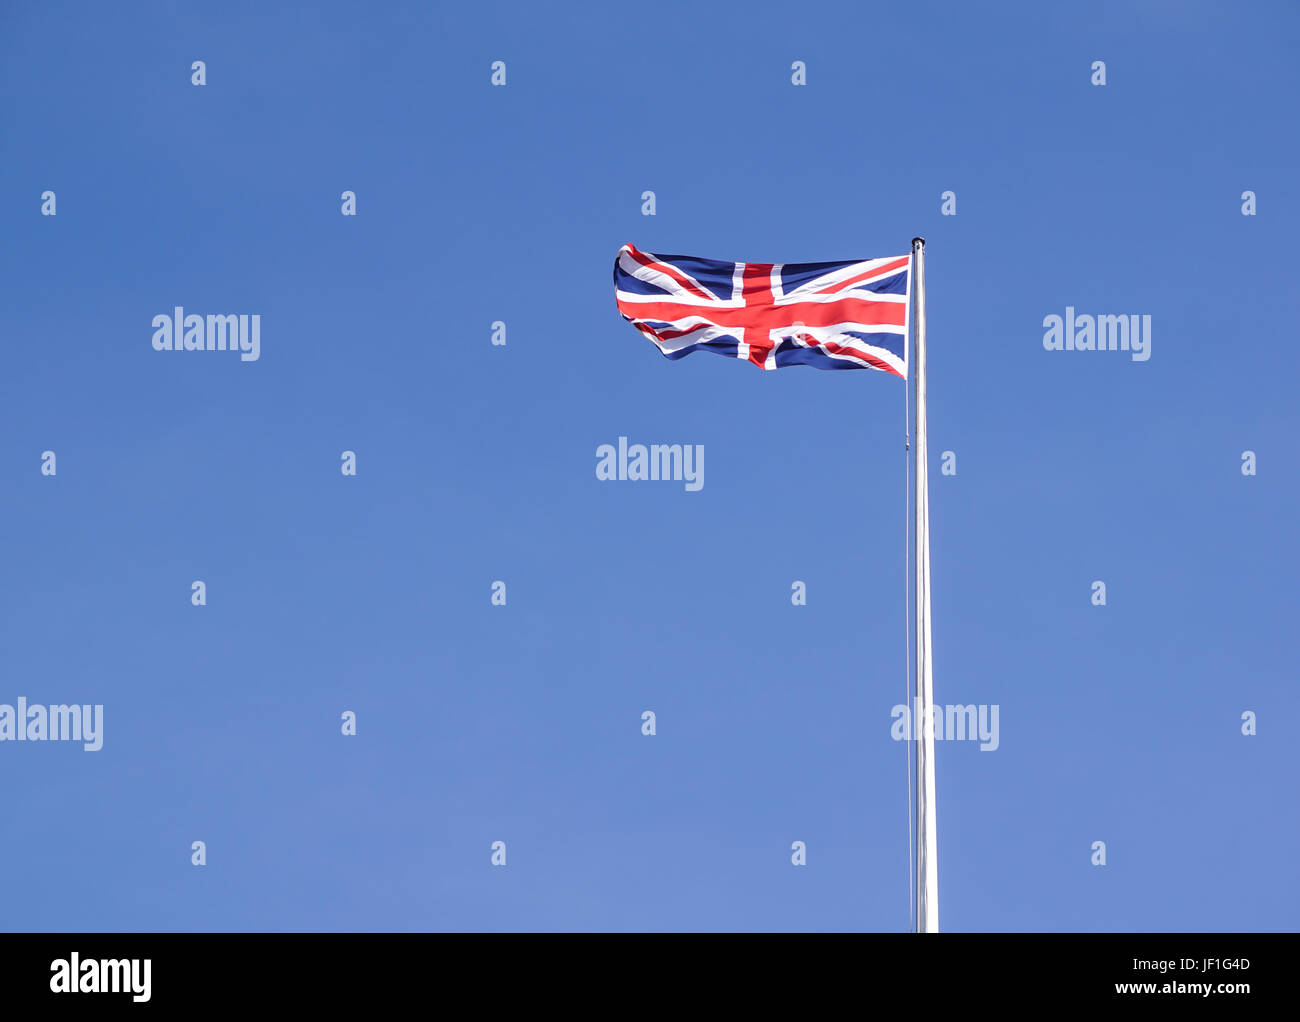 The Flag Of The United Kingdom The Union Jack Stock Photo Alamy